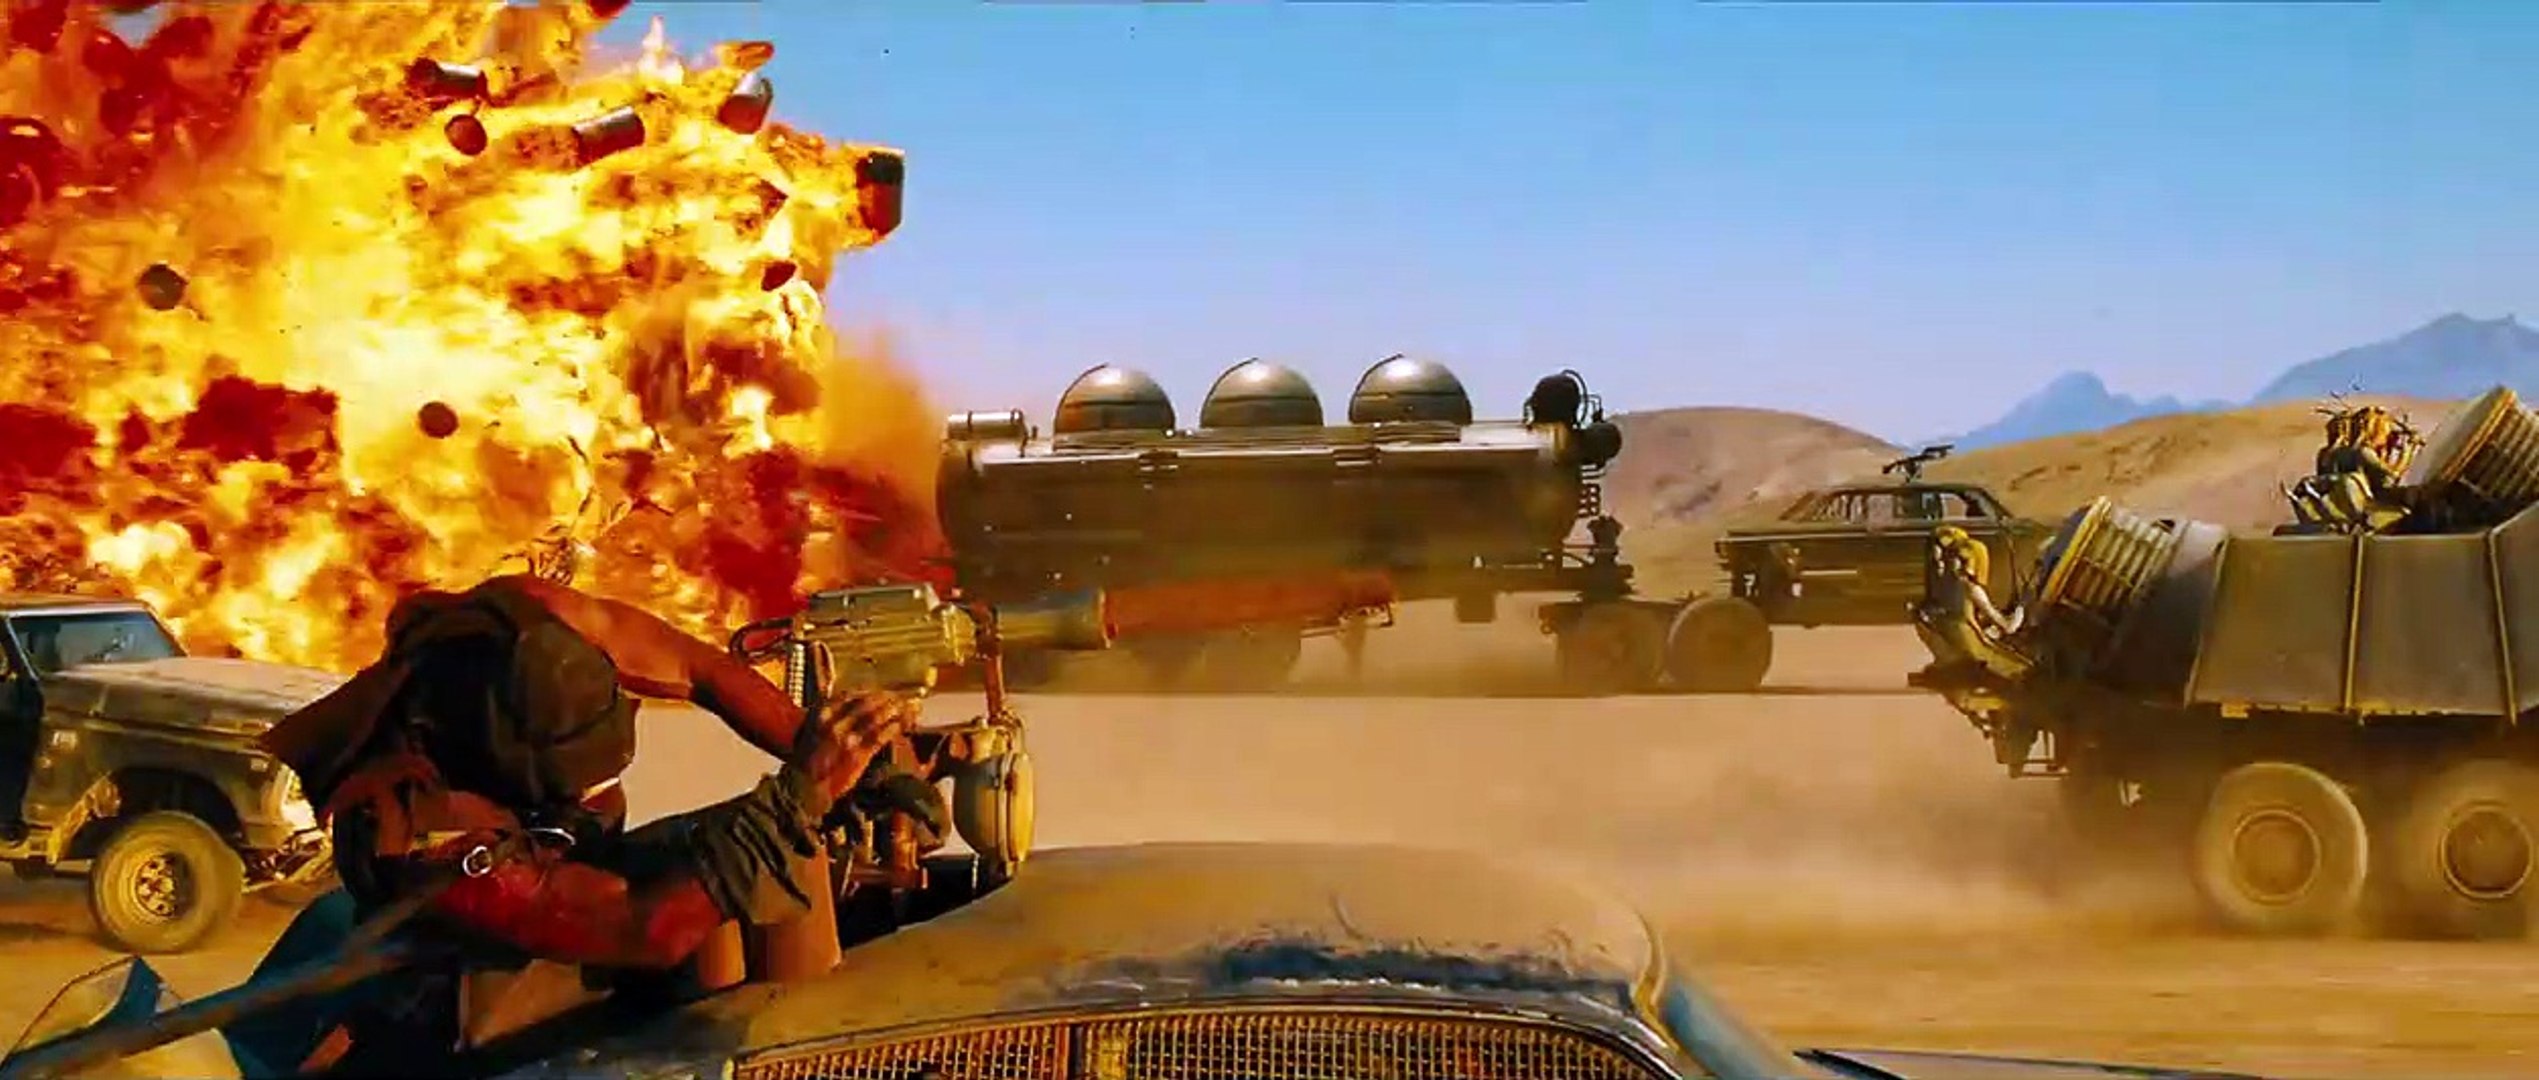 Mad Max : Fury Road- Türkçe Altyazılı Ana Fragman - Dailymotion Video